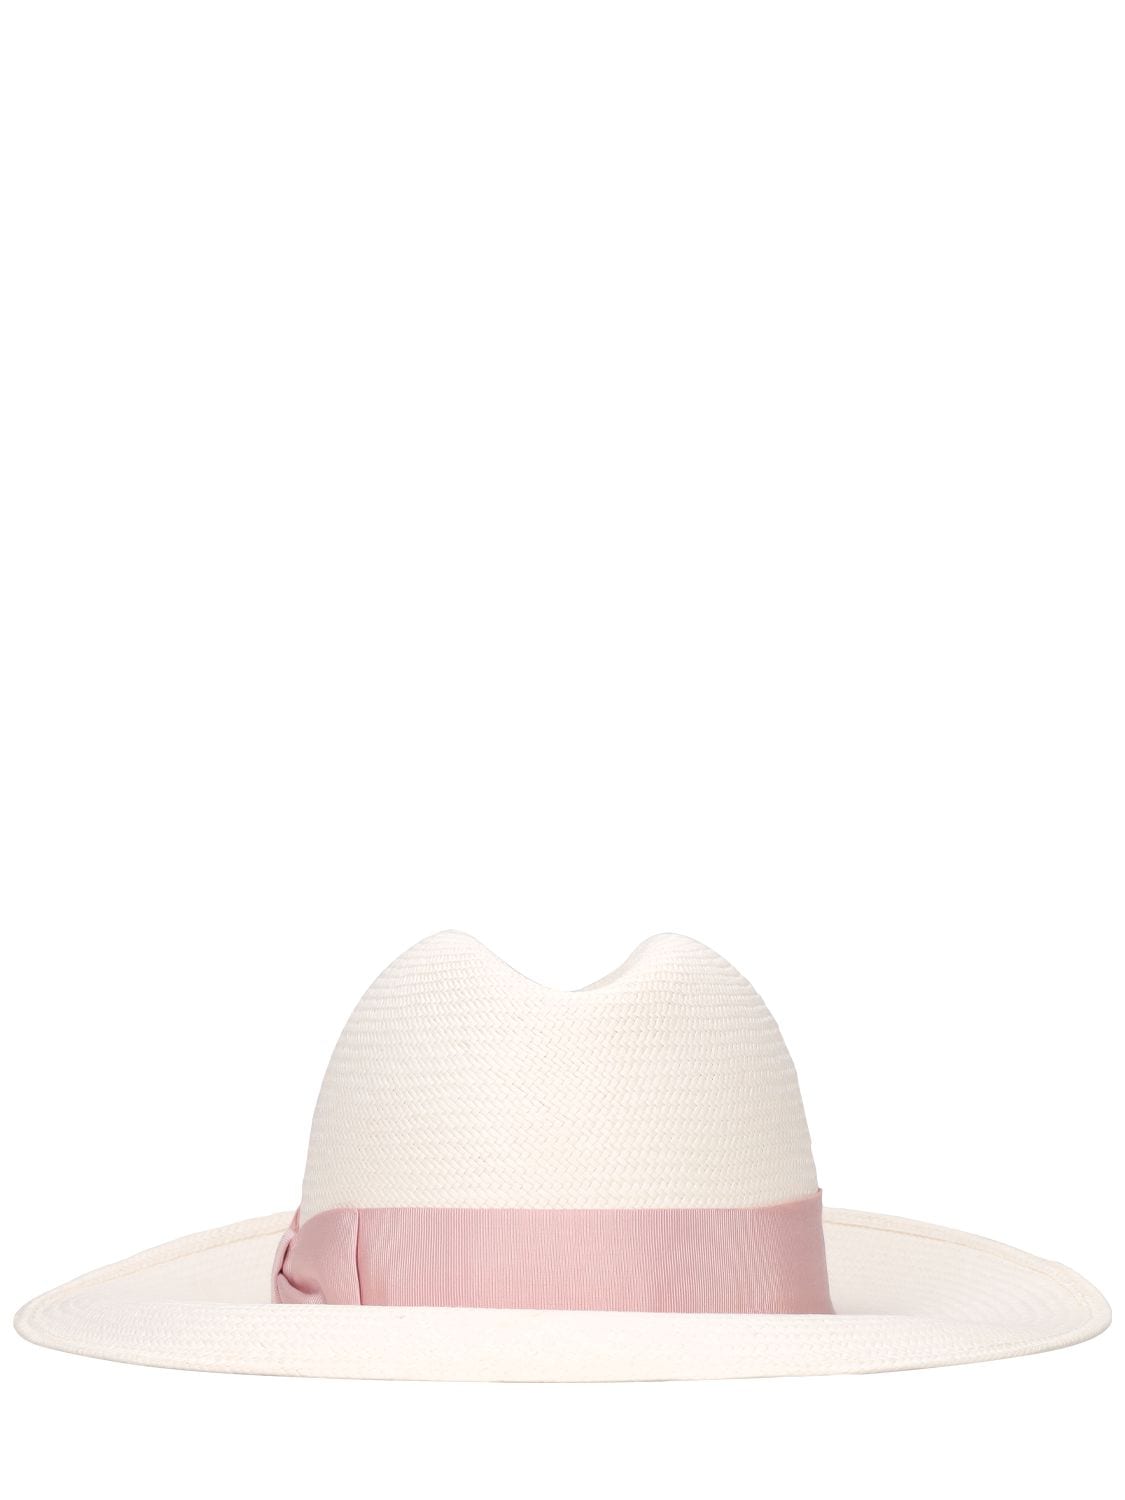 Claudette Fine Straw Panama Hat – WOMEN > ACCESSORIES > HATS